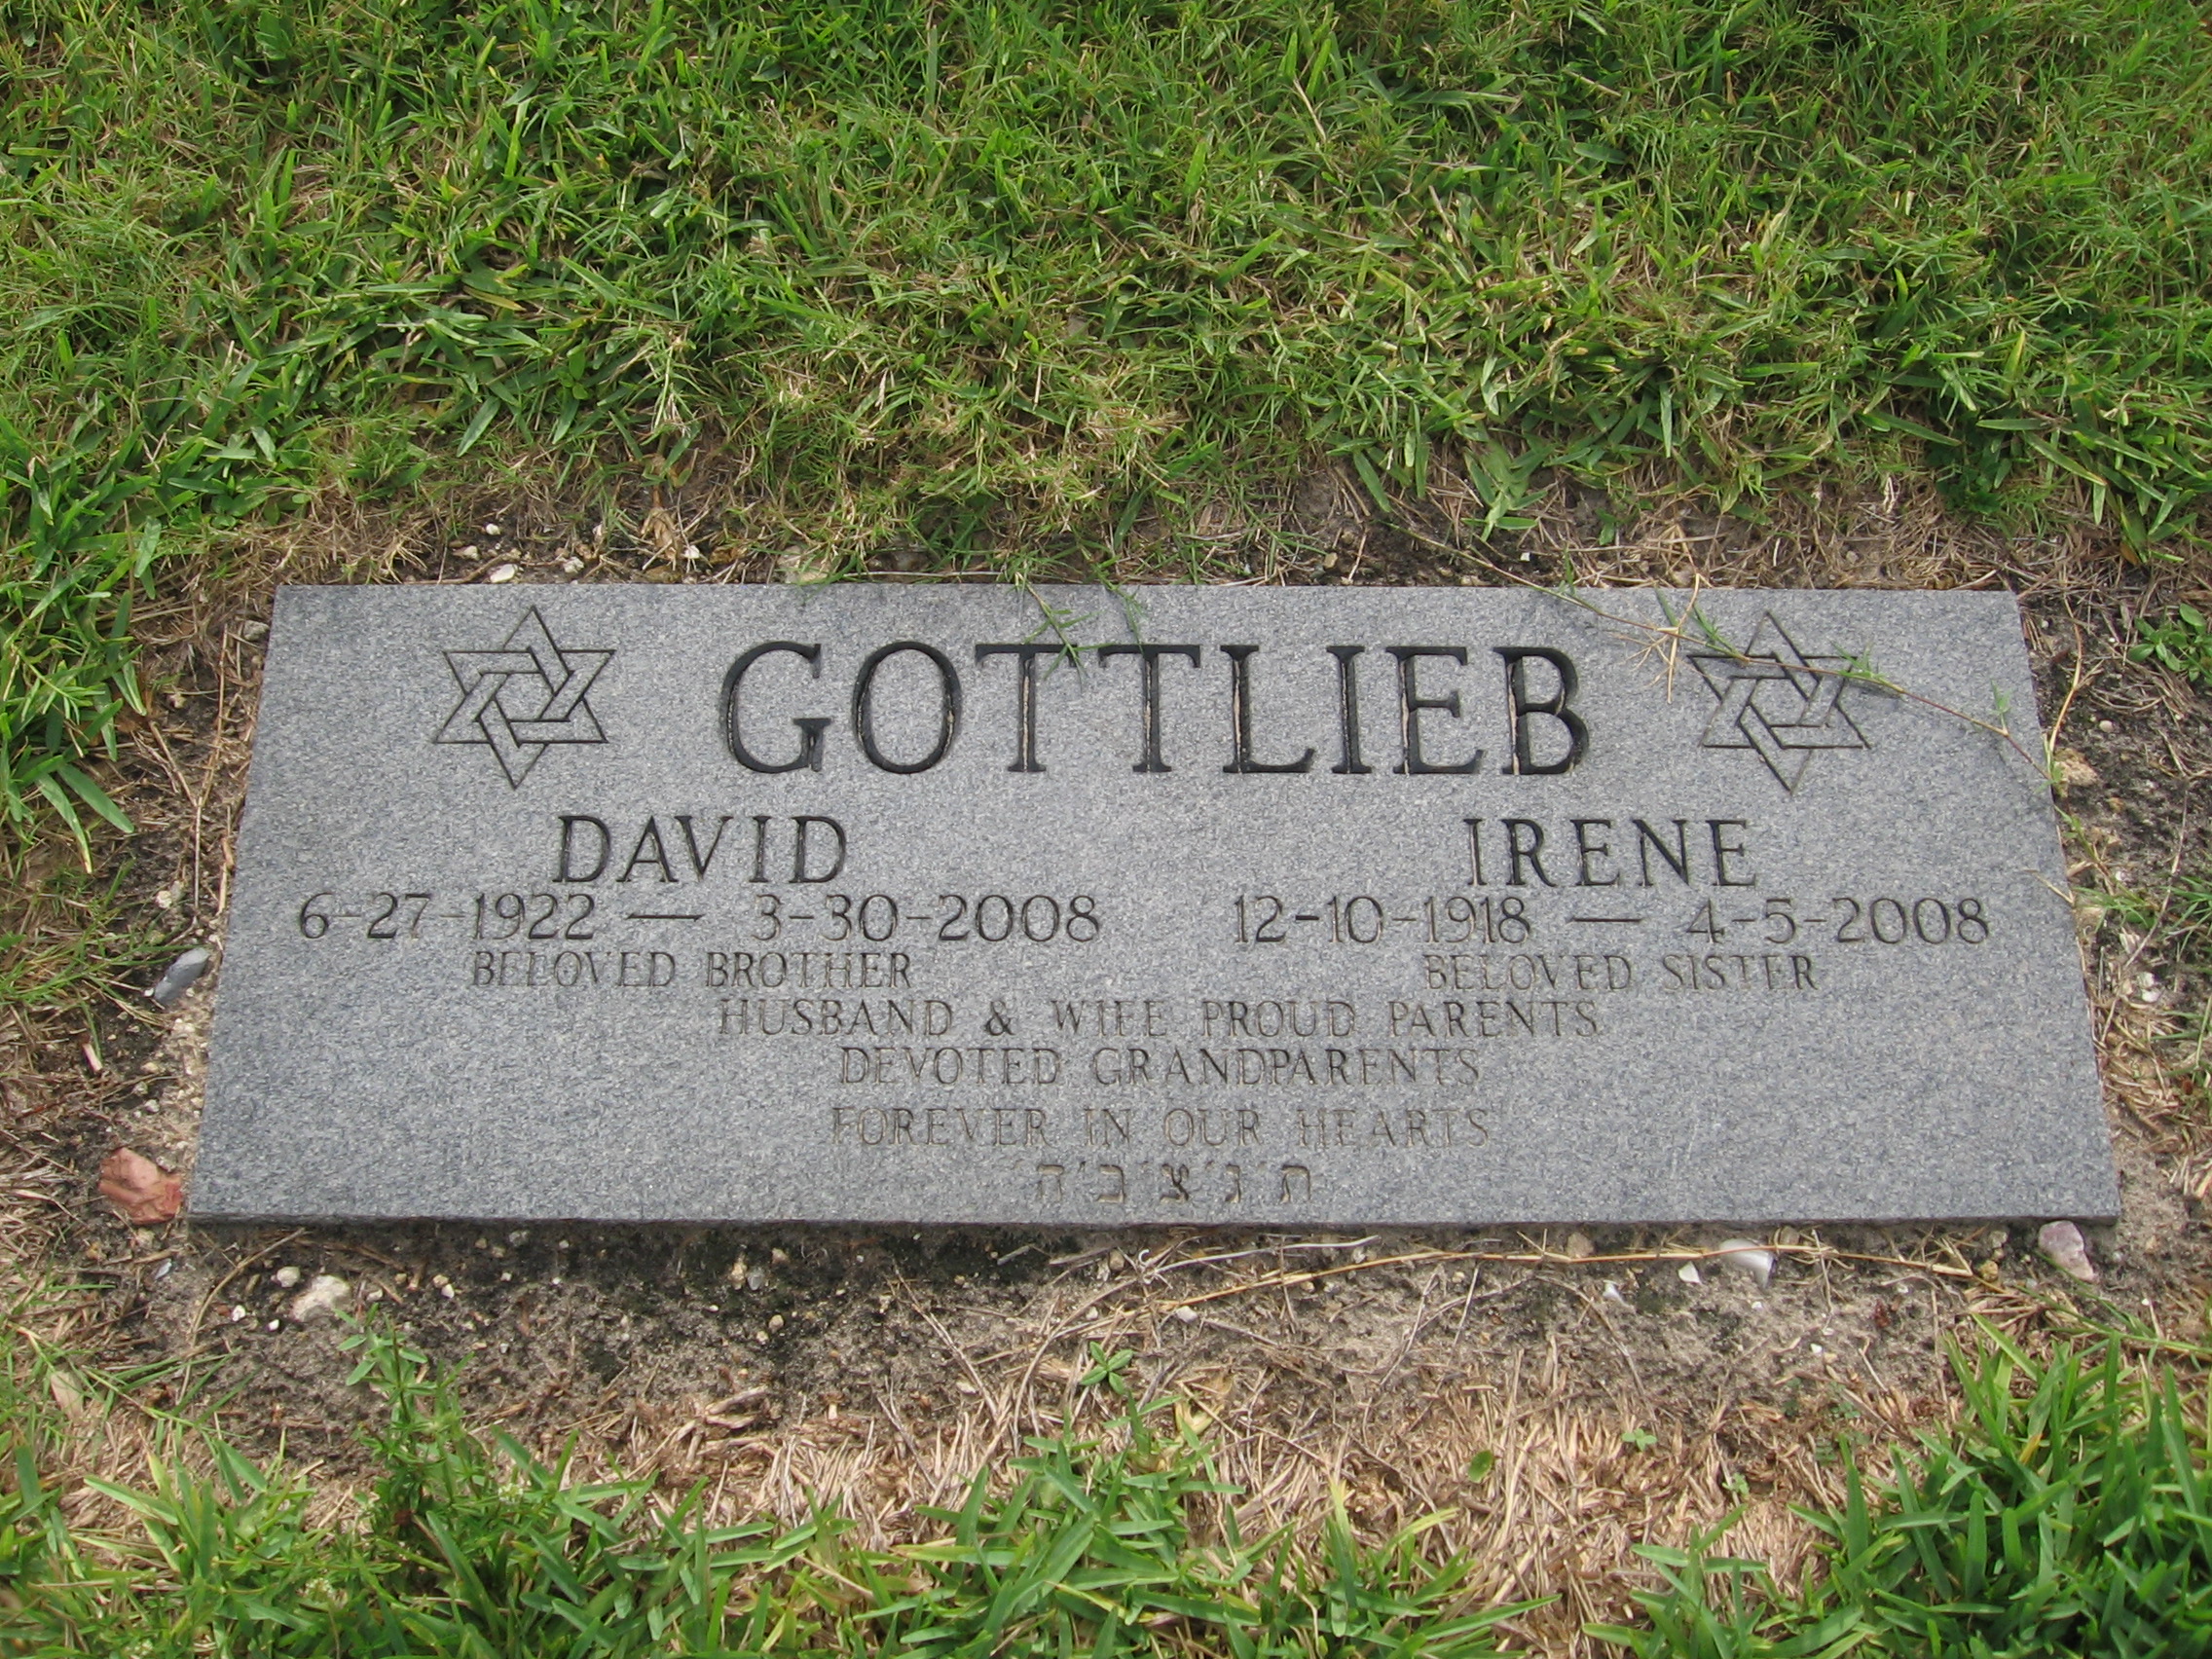 David Gottlieb